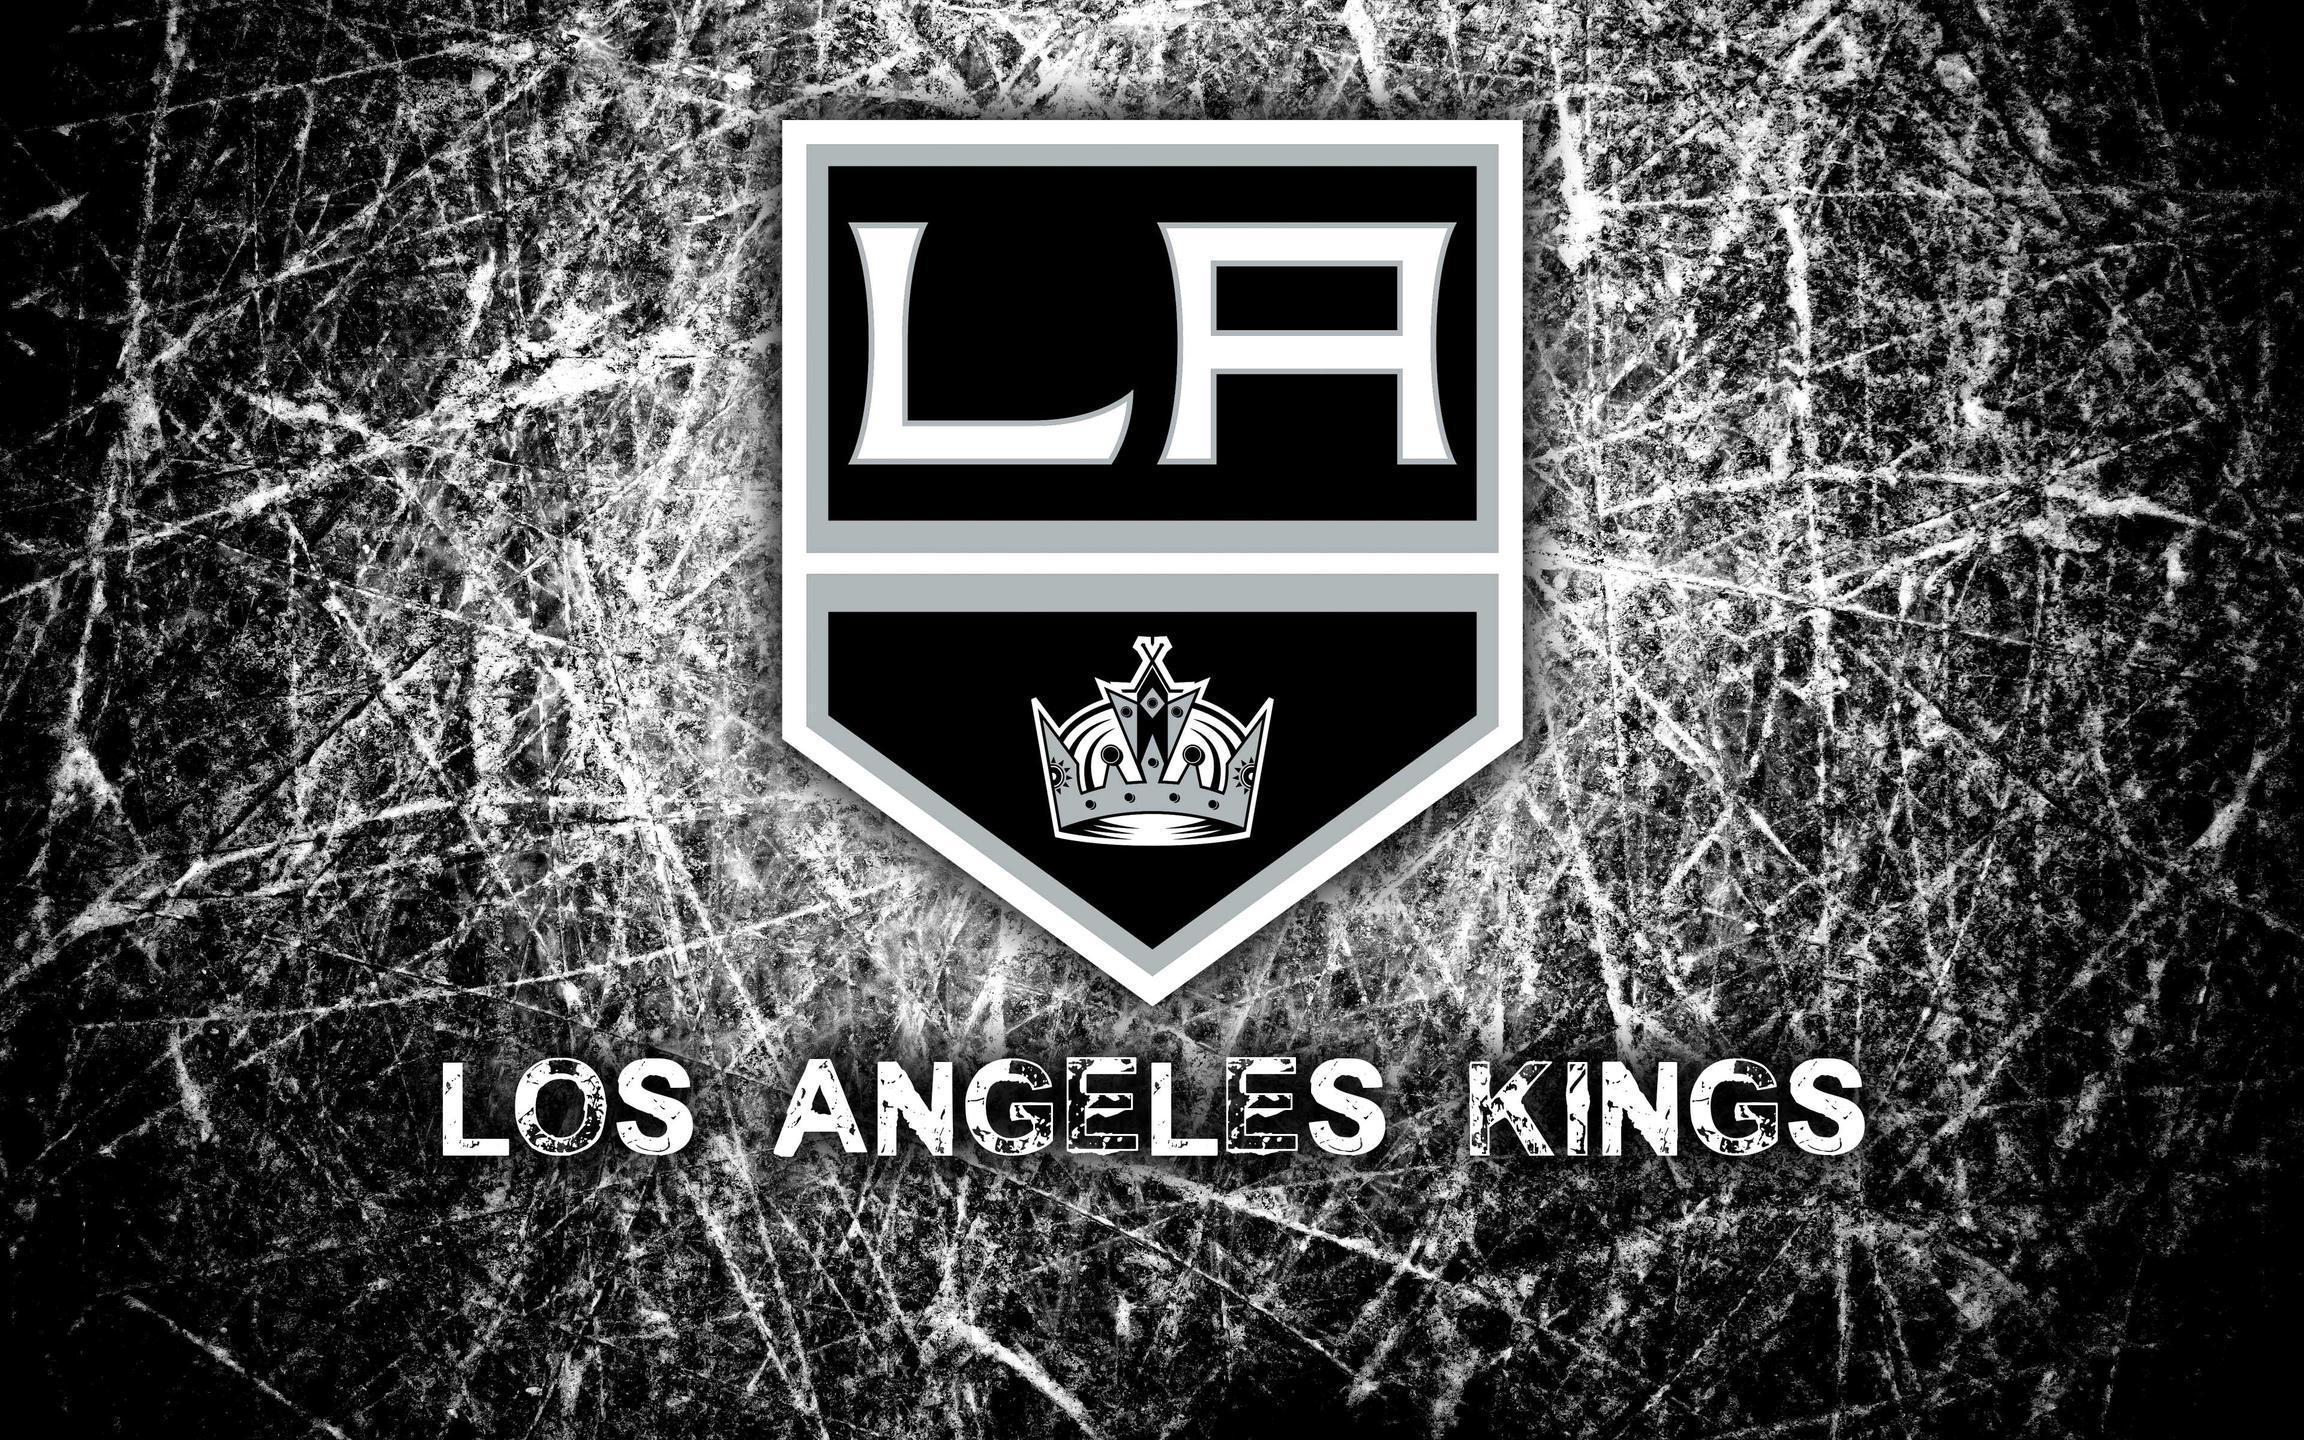 Los Angeles Kings 2014 Logo Wallpaper Wide or HD